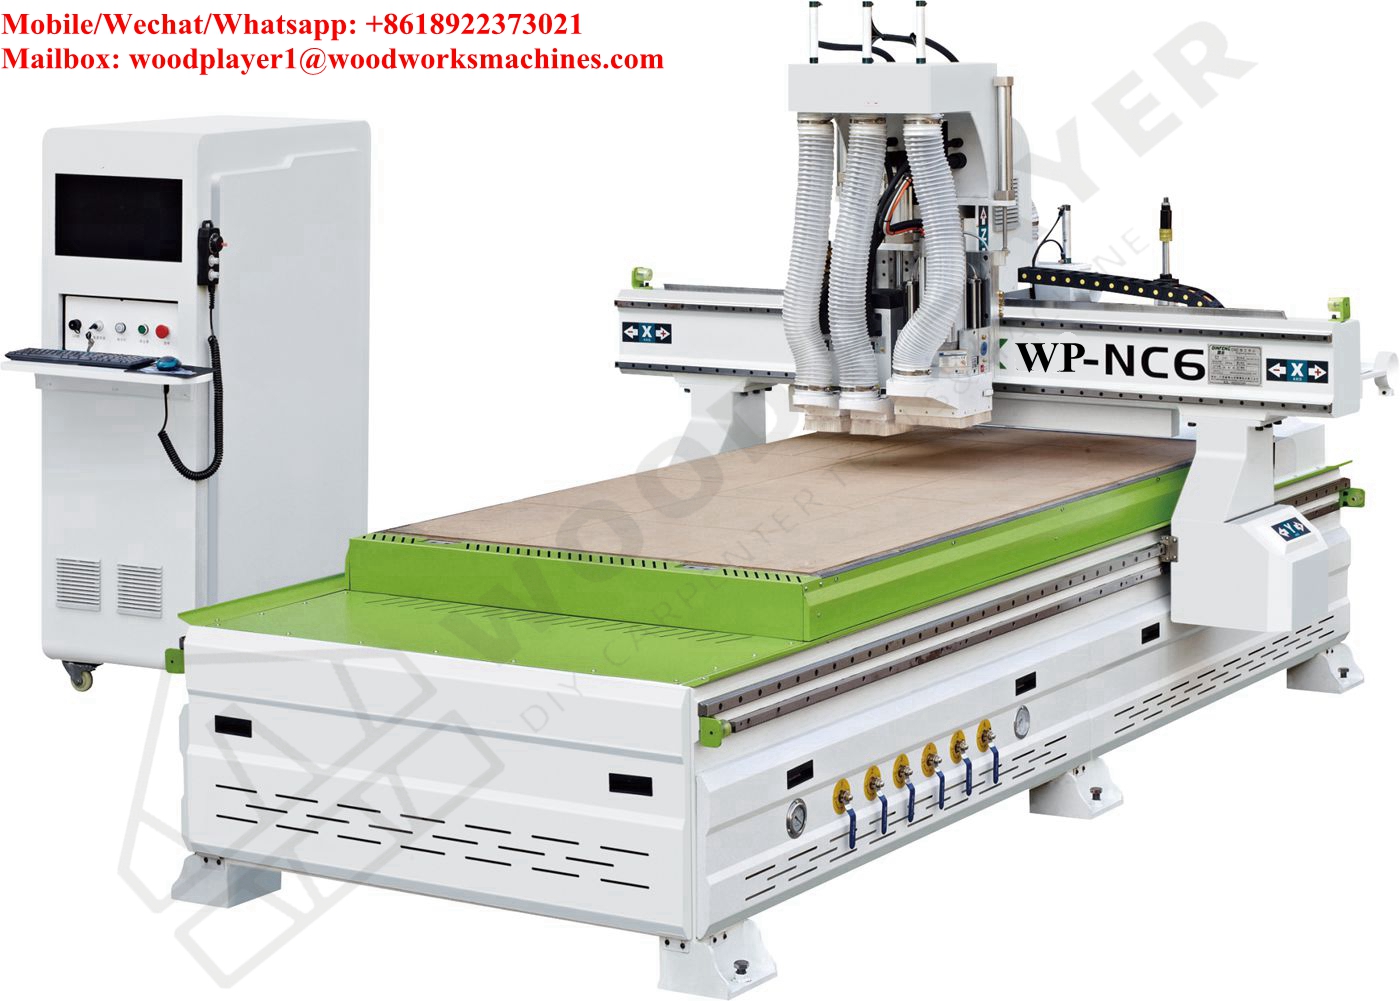 WP-NC6 CNC Cutting Center Woodworking Machinery